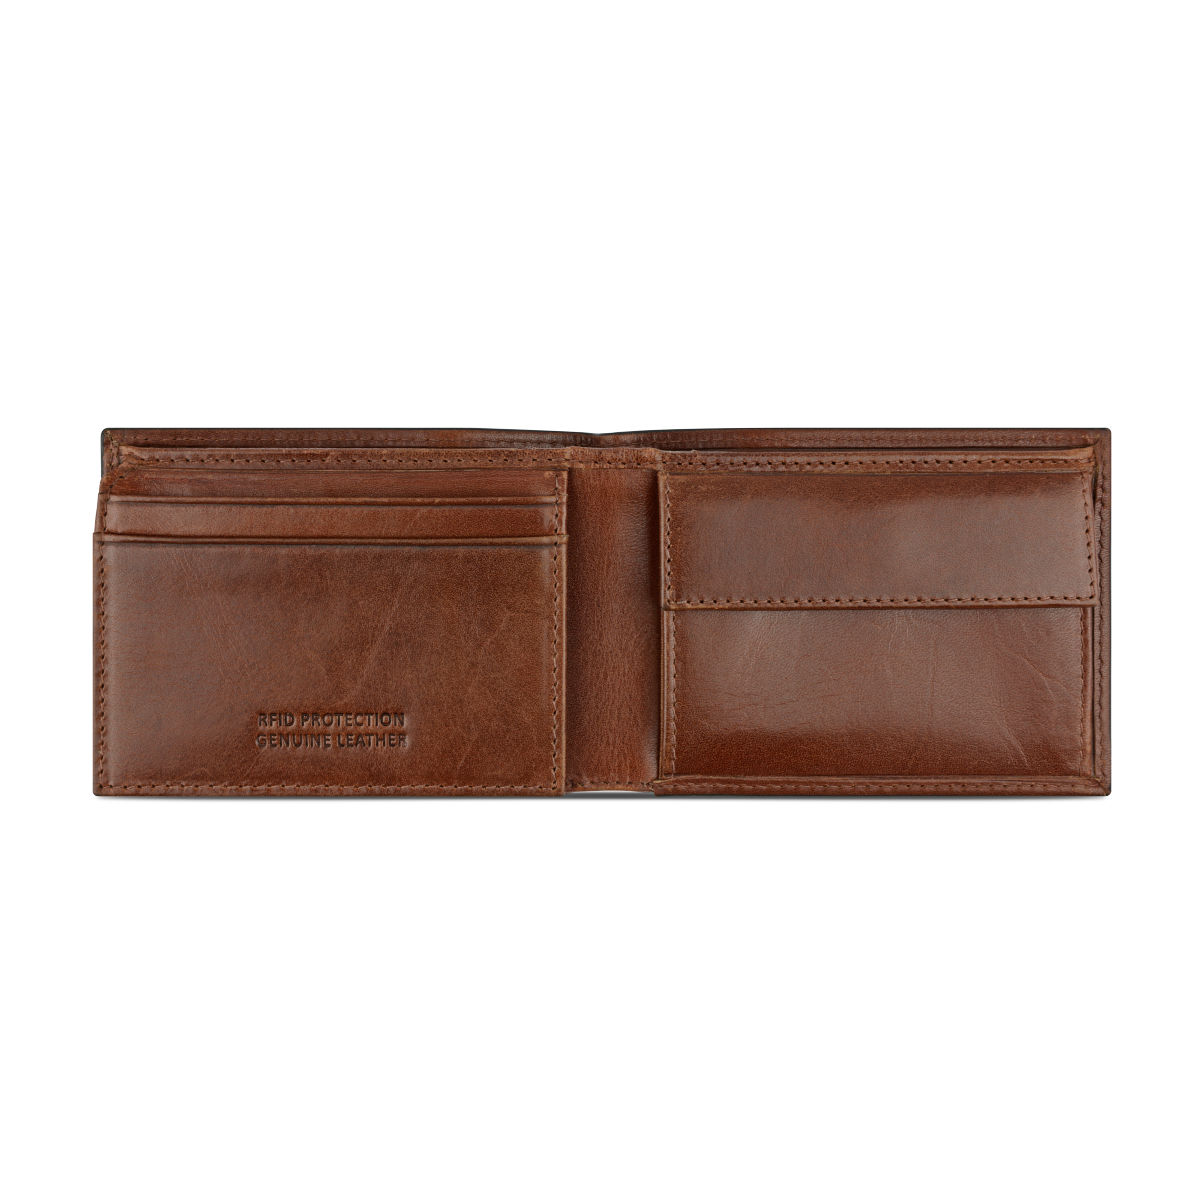 leather cognac men\'s brown wallet - Bugatti